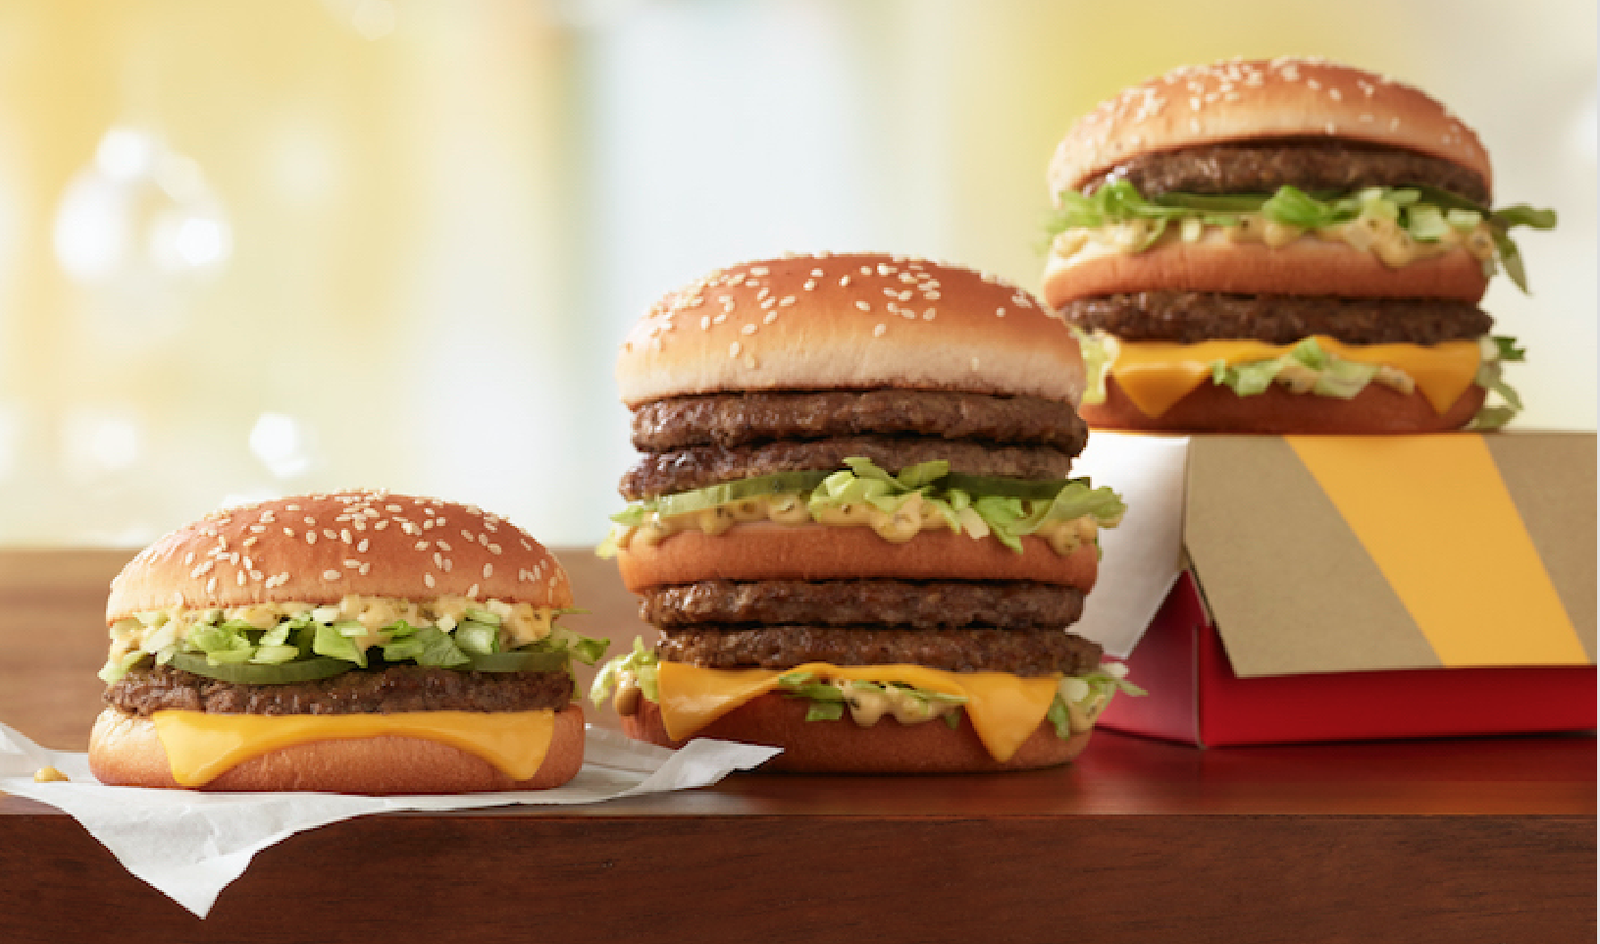 McDonald's Announced 2 New Burgers Including A Massive Double Big Mac With 4 Patties. Food, Fast food items, Big mac